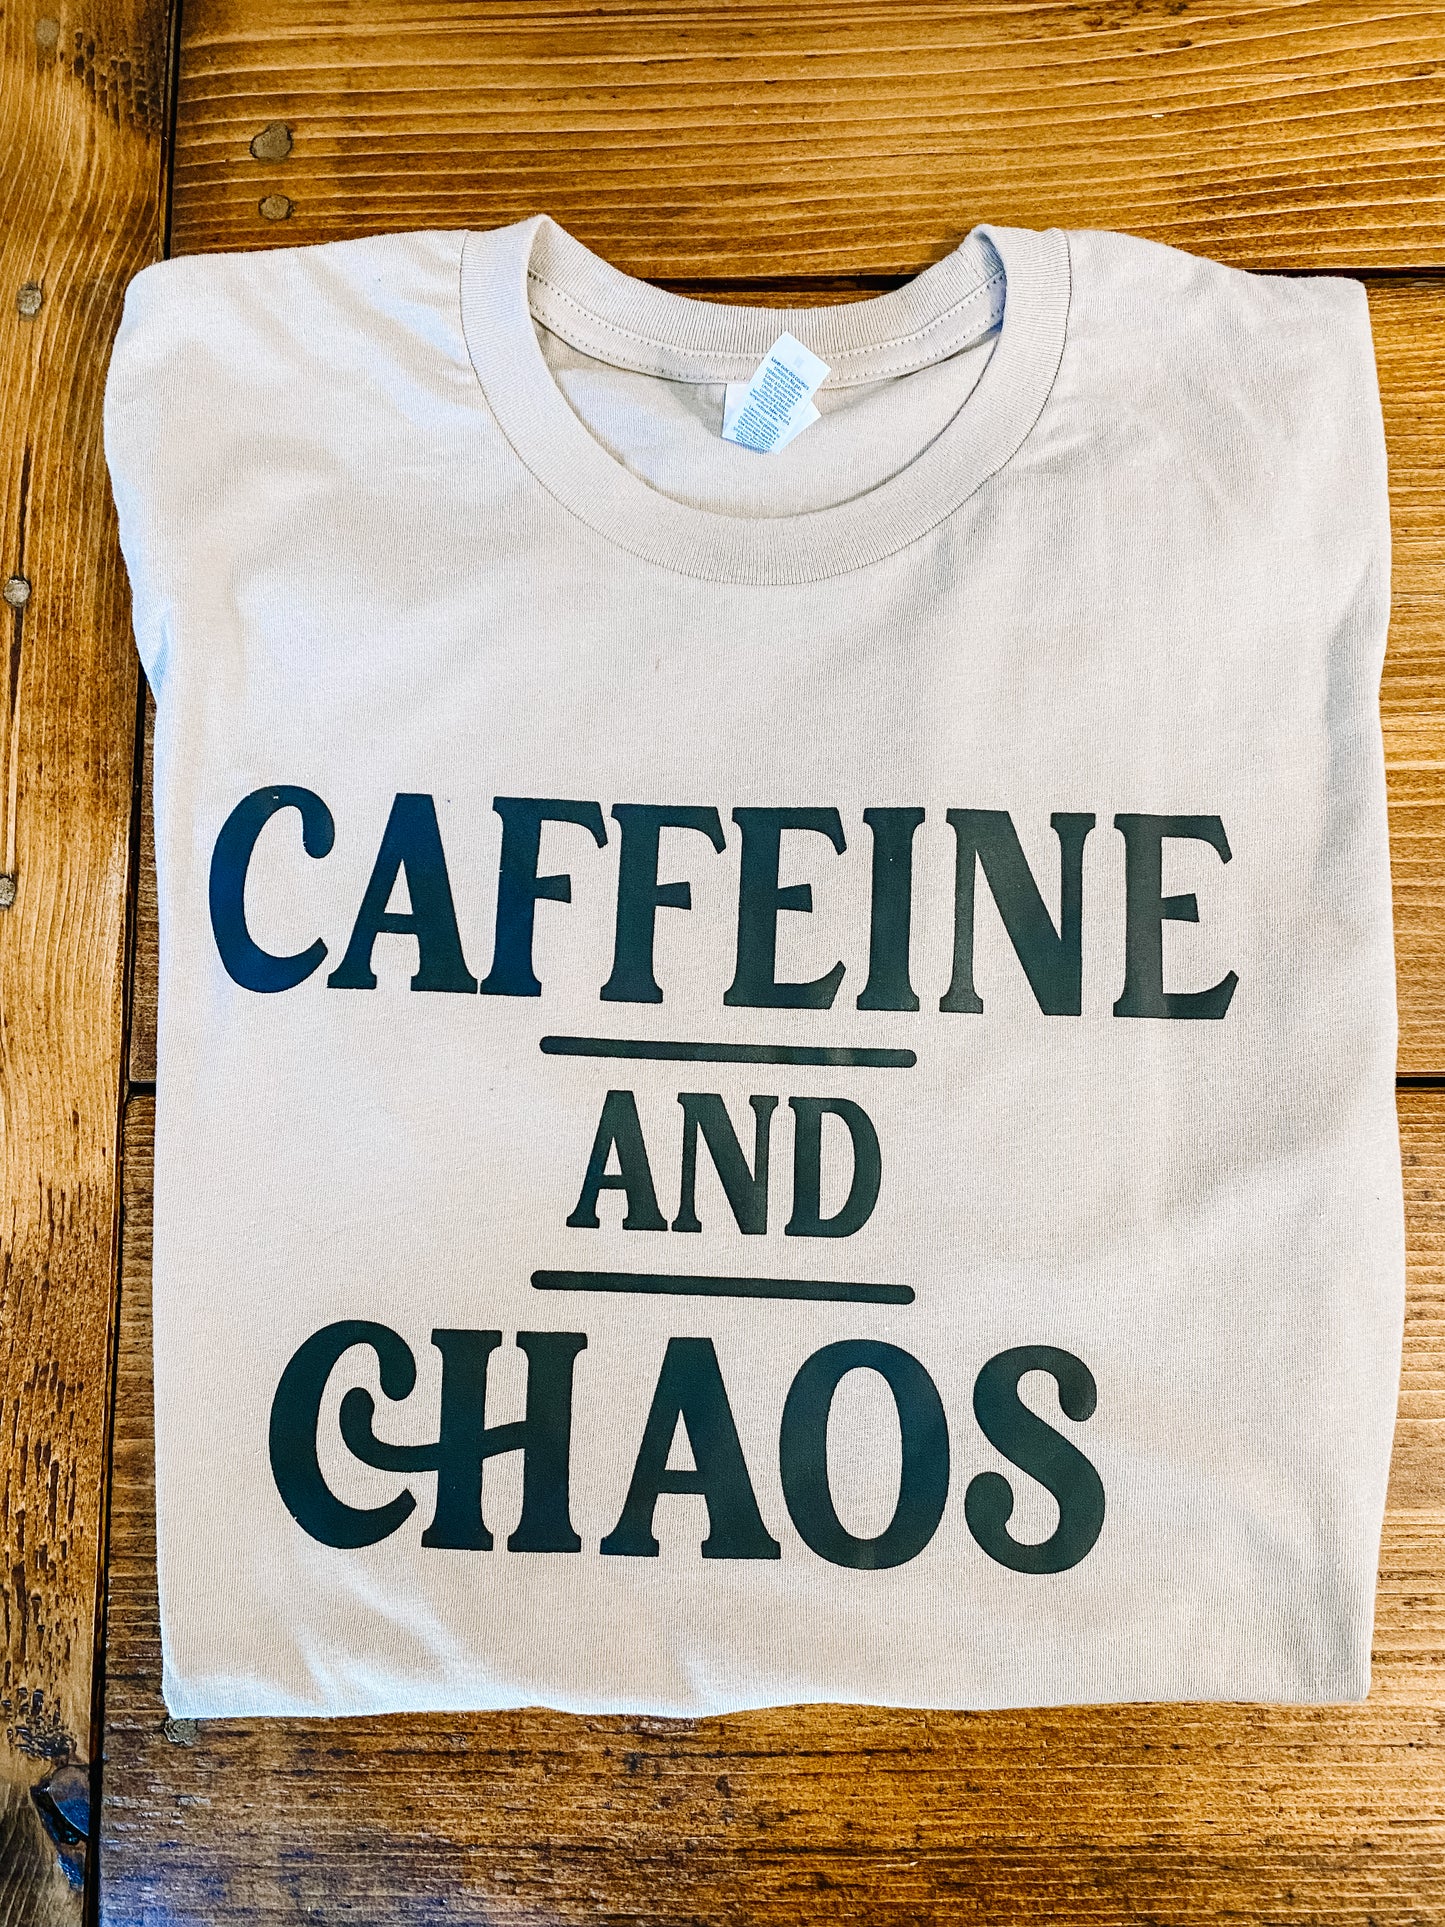 Caffeine and Chaos t-shirt